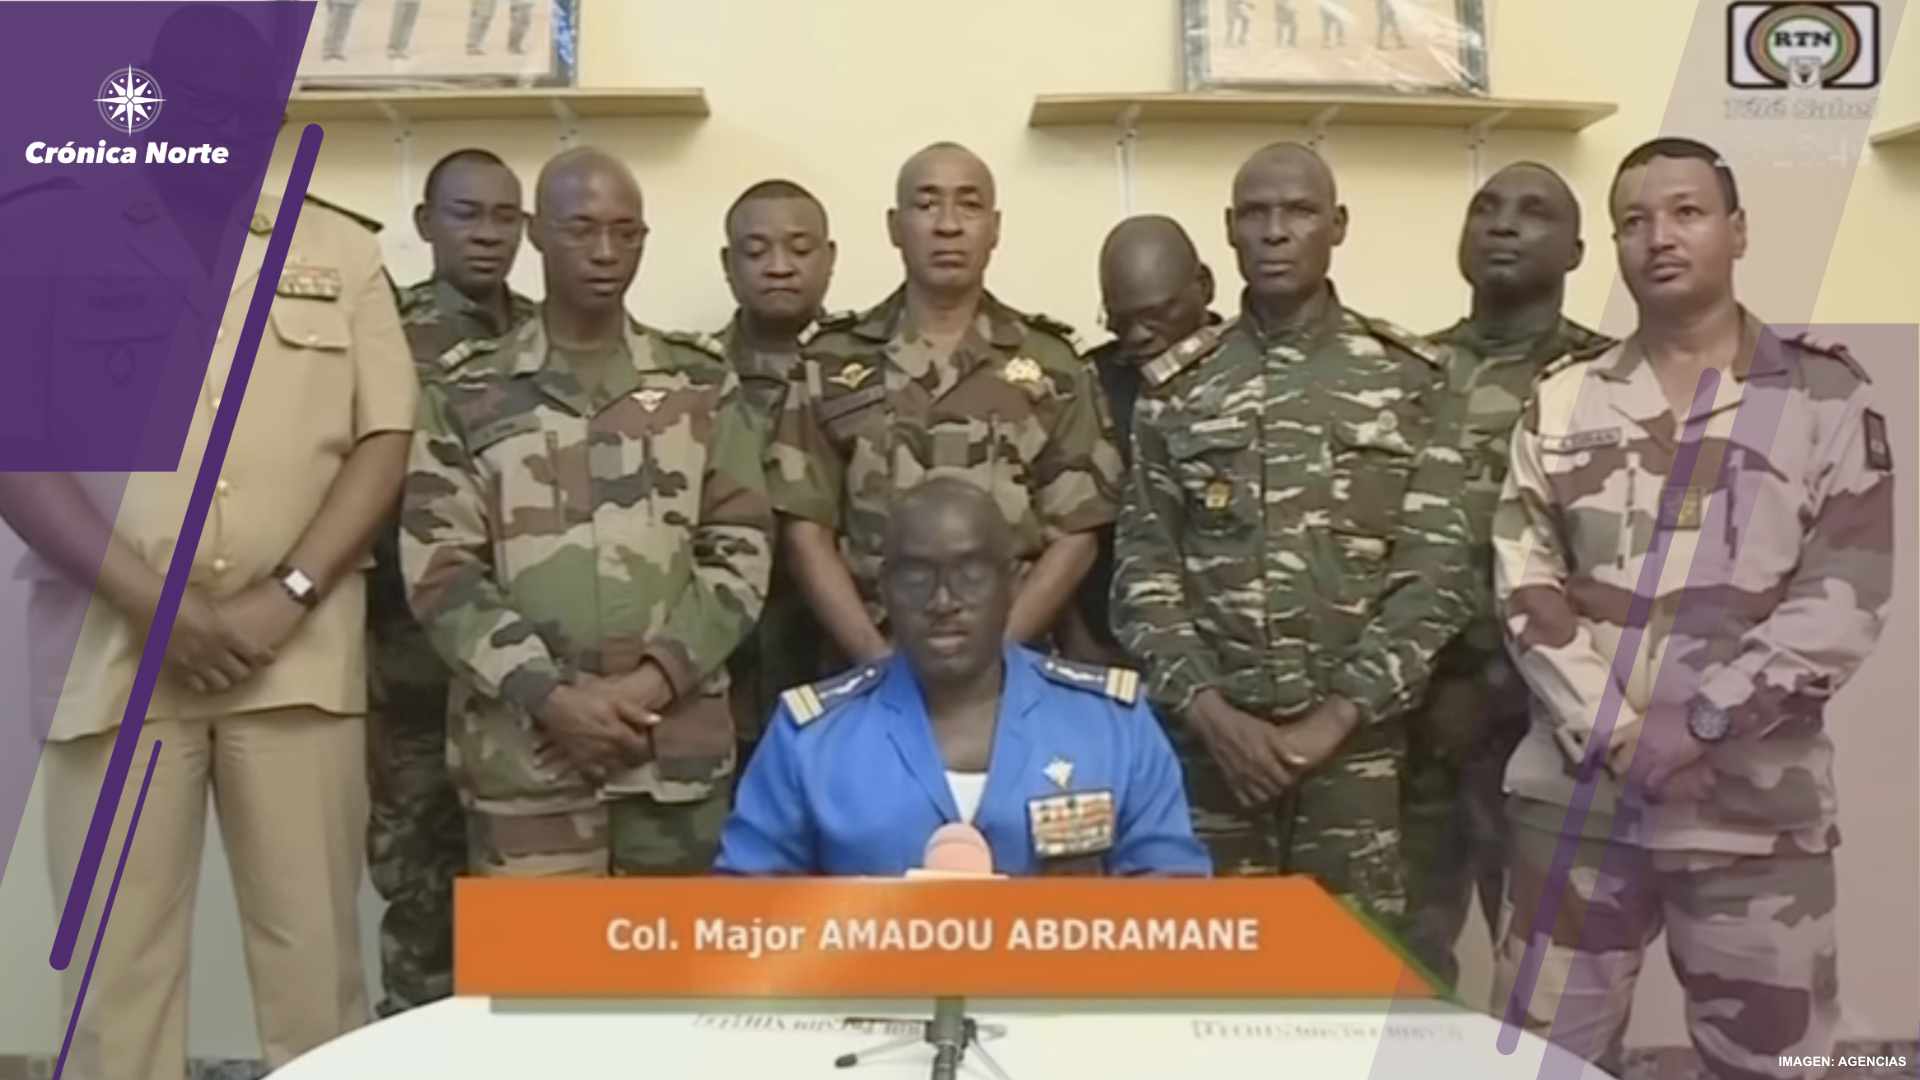 La cúpula militar da un golpe de Estado en Níger